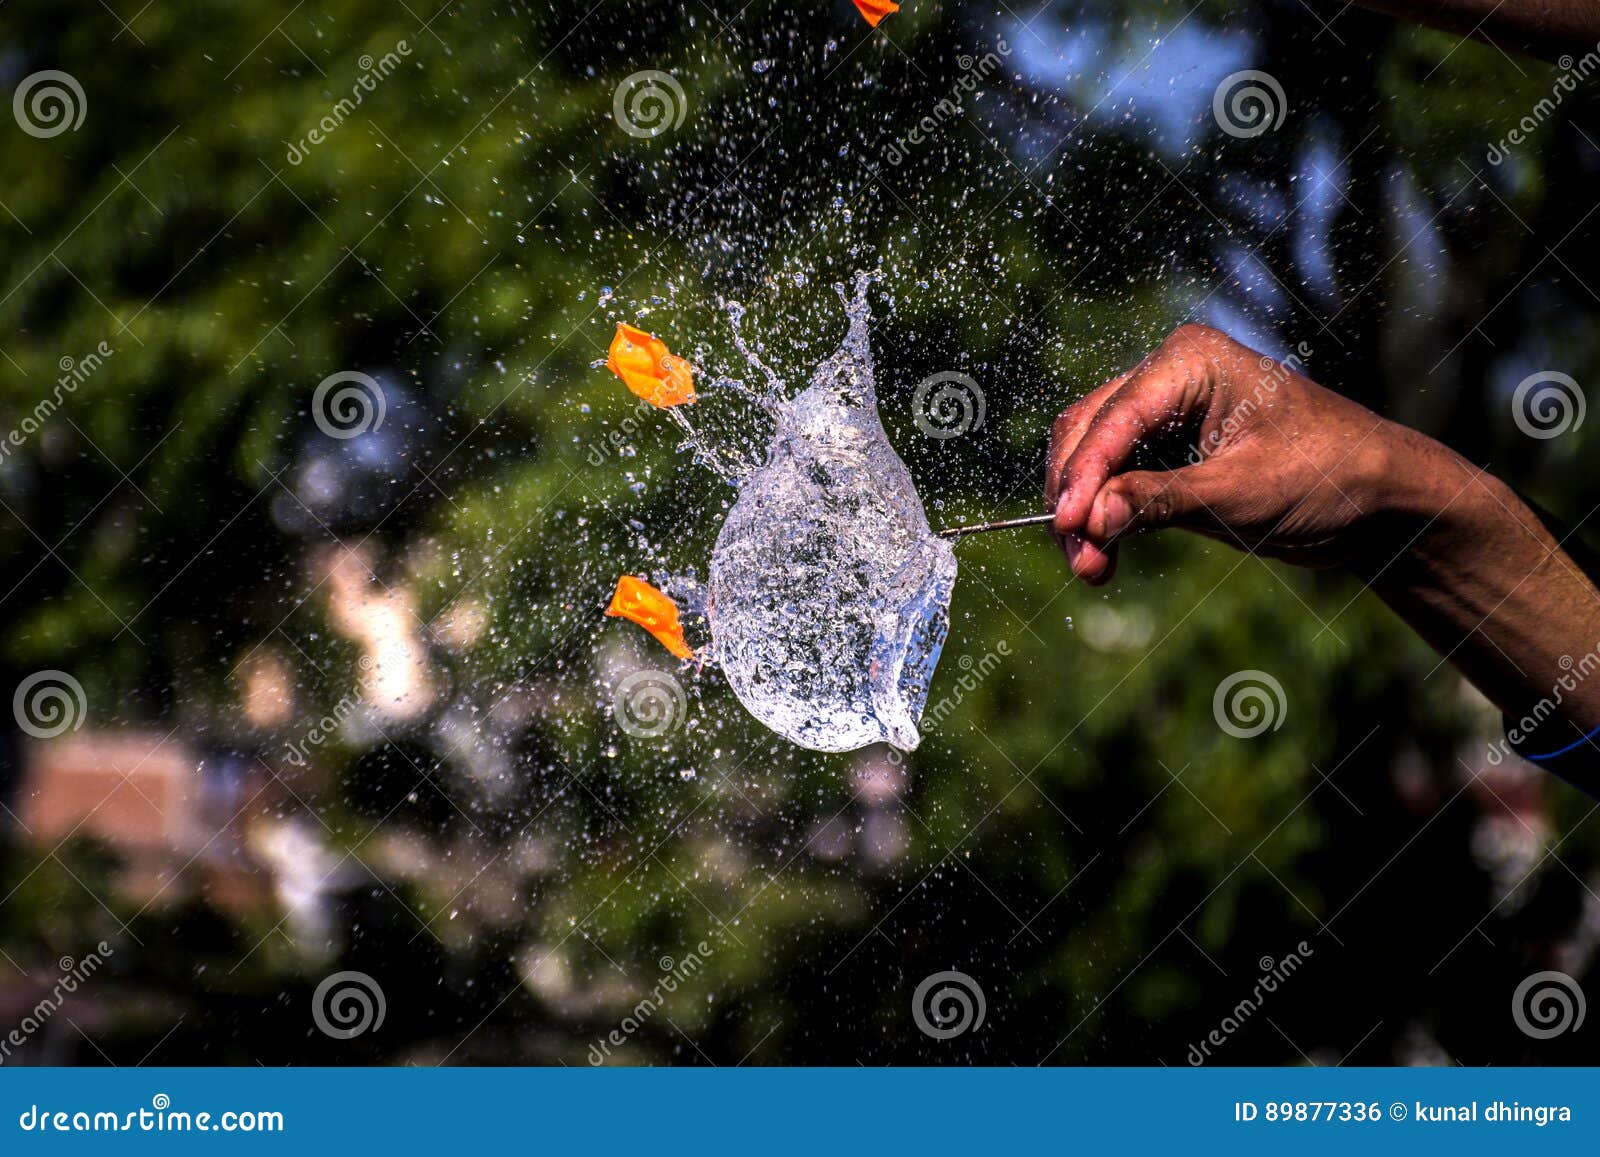 Zie insecten mug Christian Water Balloon Splash stock photo. Image of timing, serene - 89877336